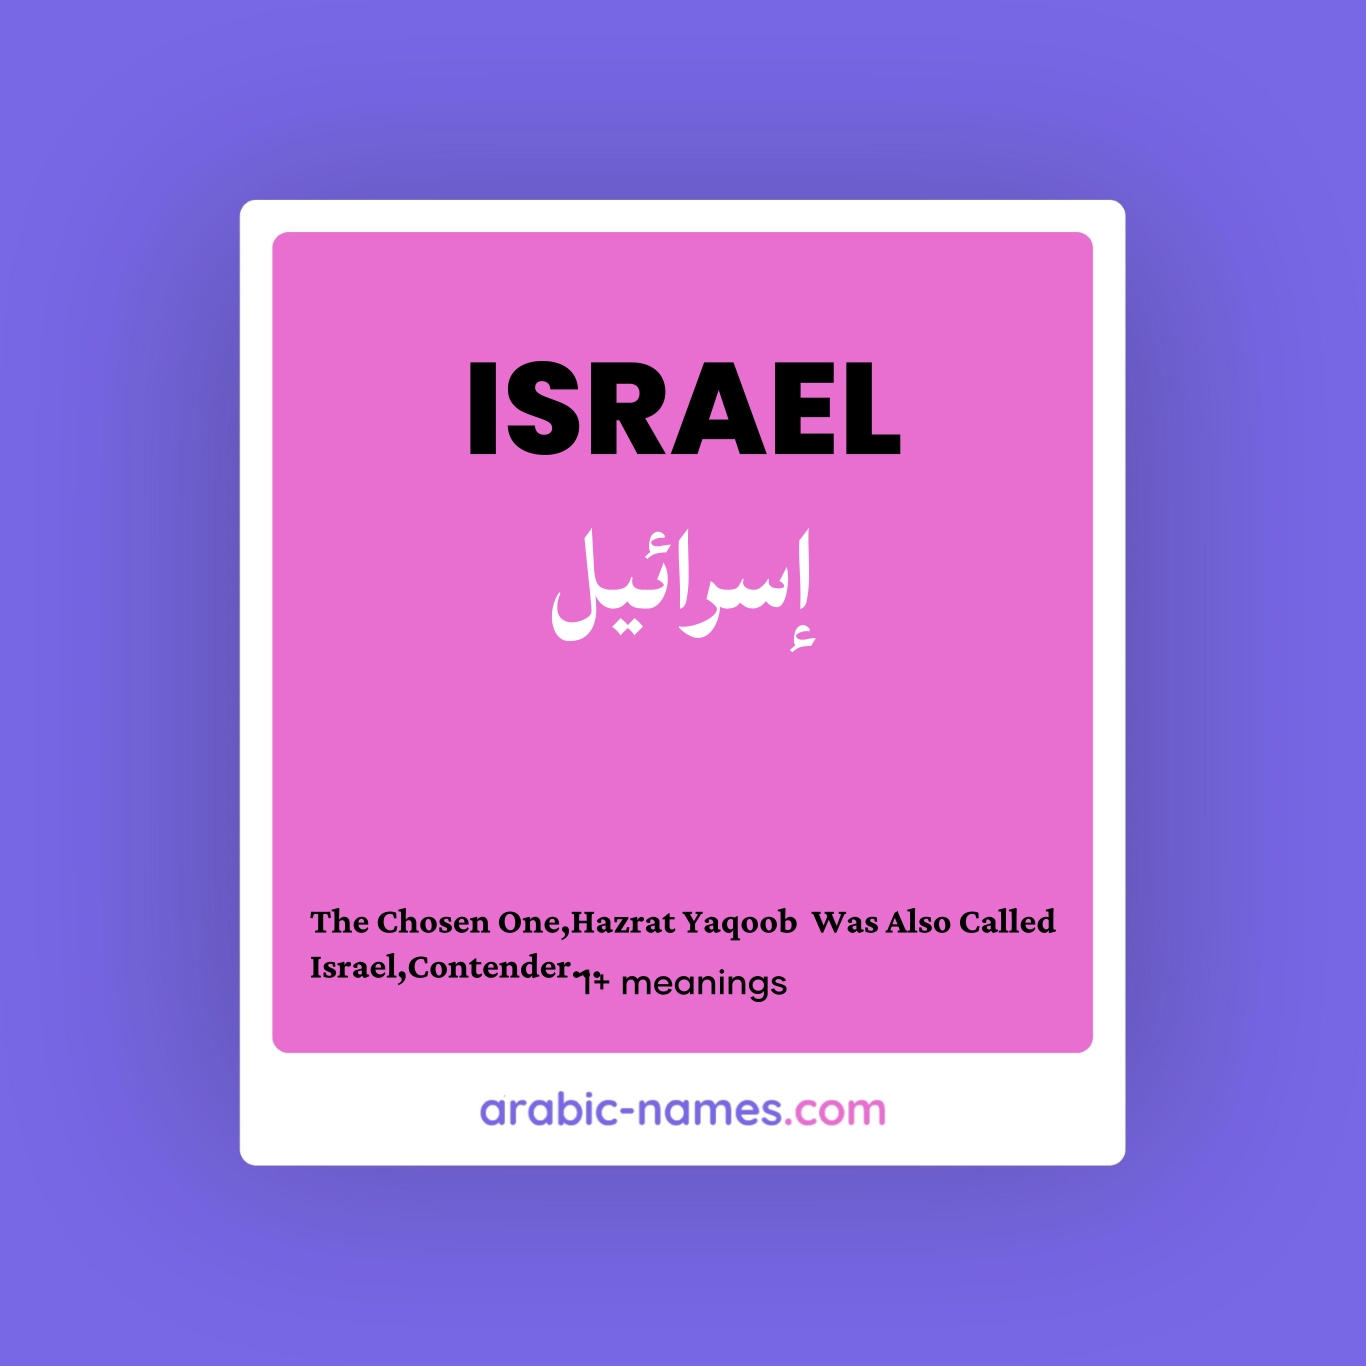 ISRAEL (إسرائيل) Meaning in Arabic & English - Arabic Names